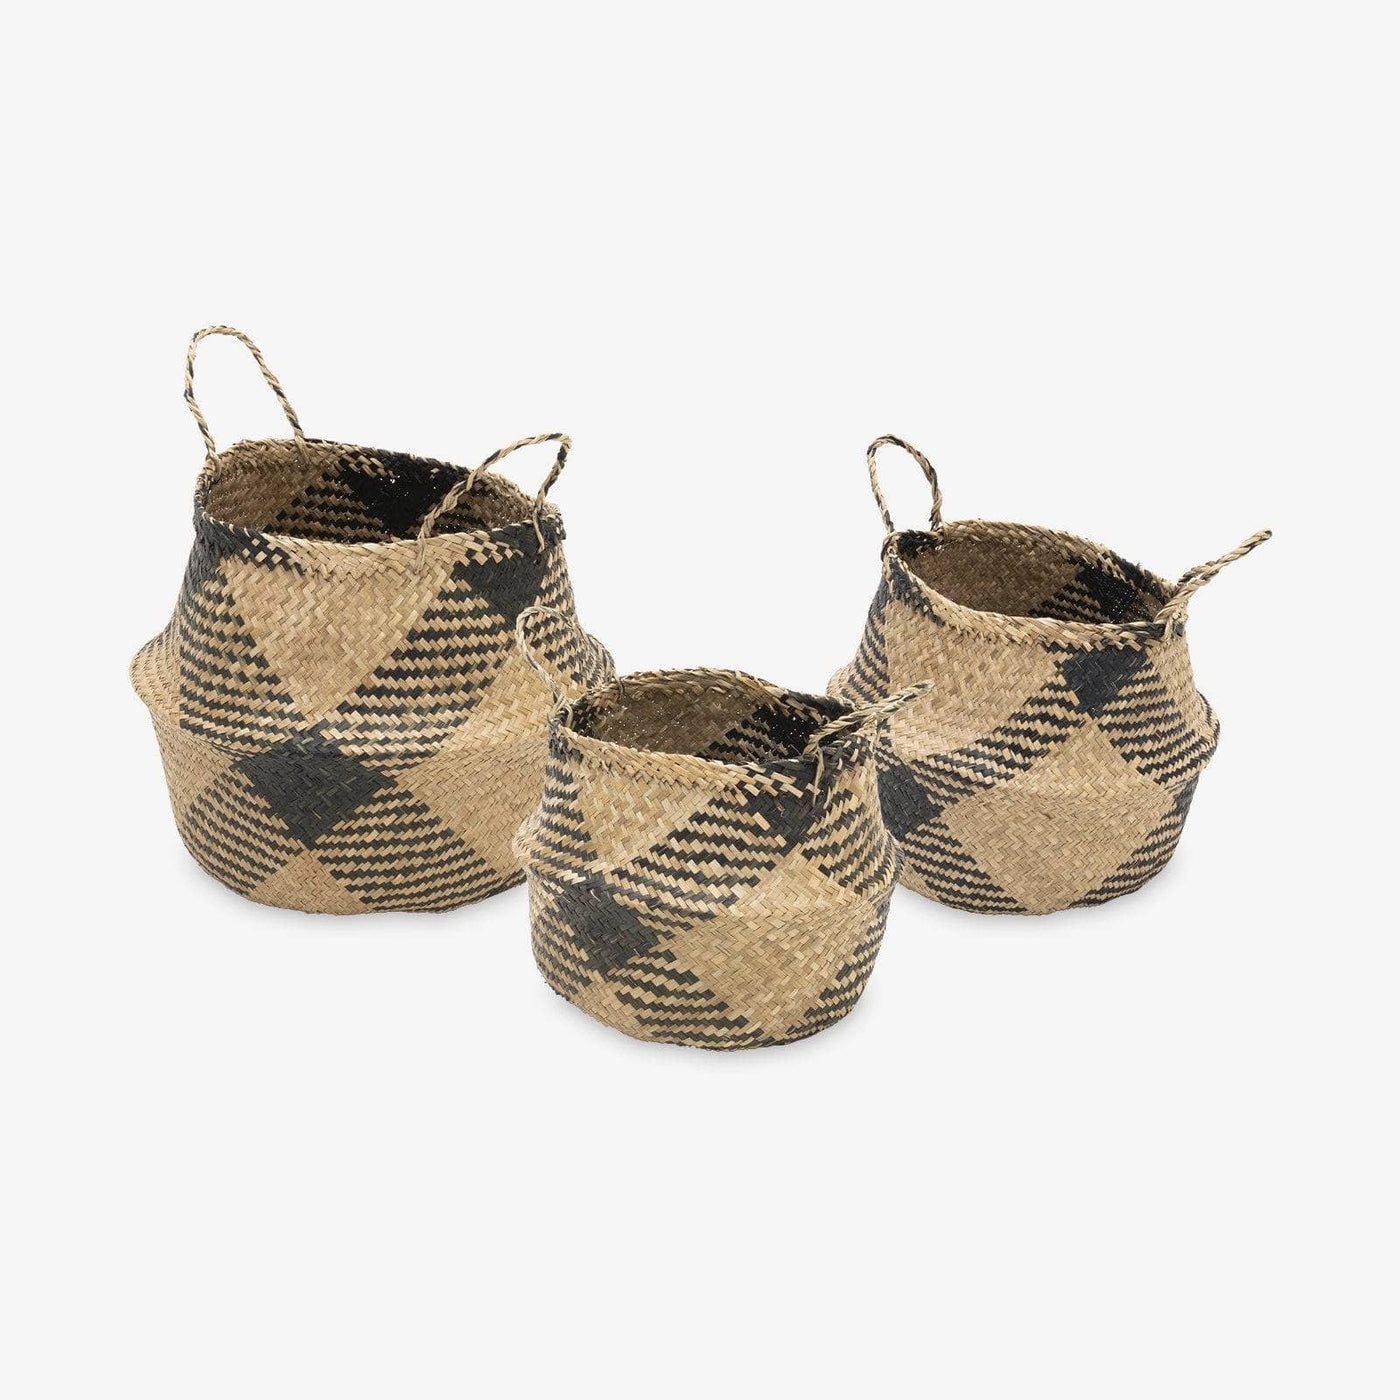 Jane Diamond Weave Seagrass Belly Basket, Natural, L Baskets sazy.com